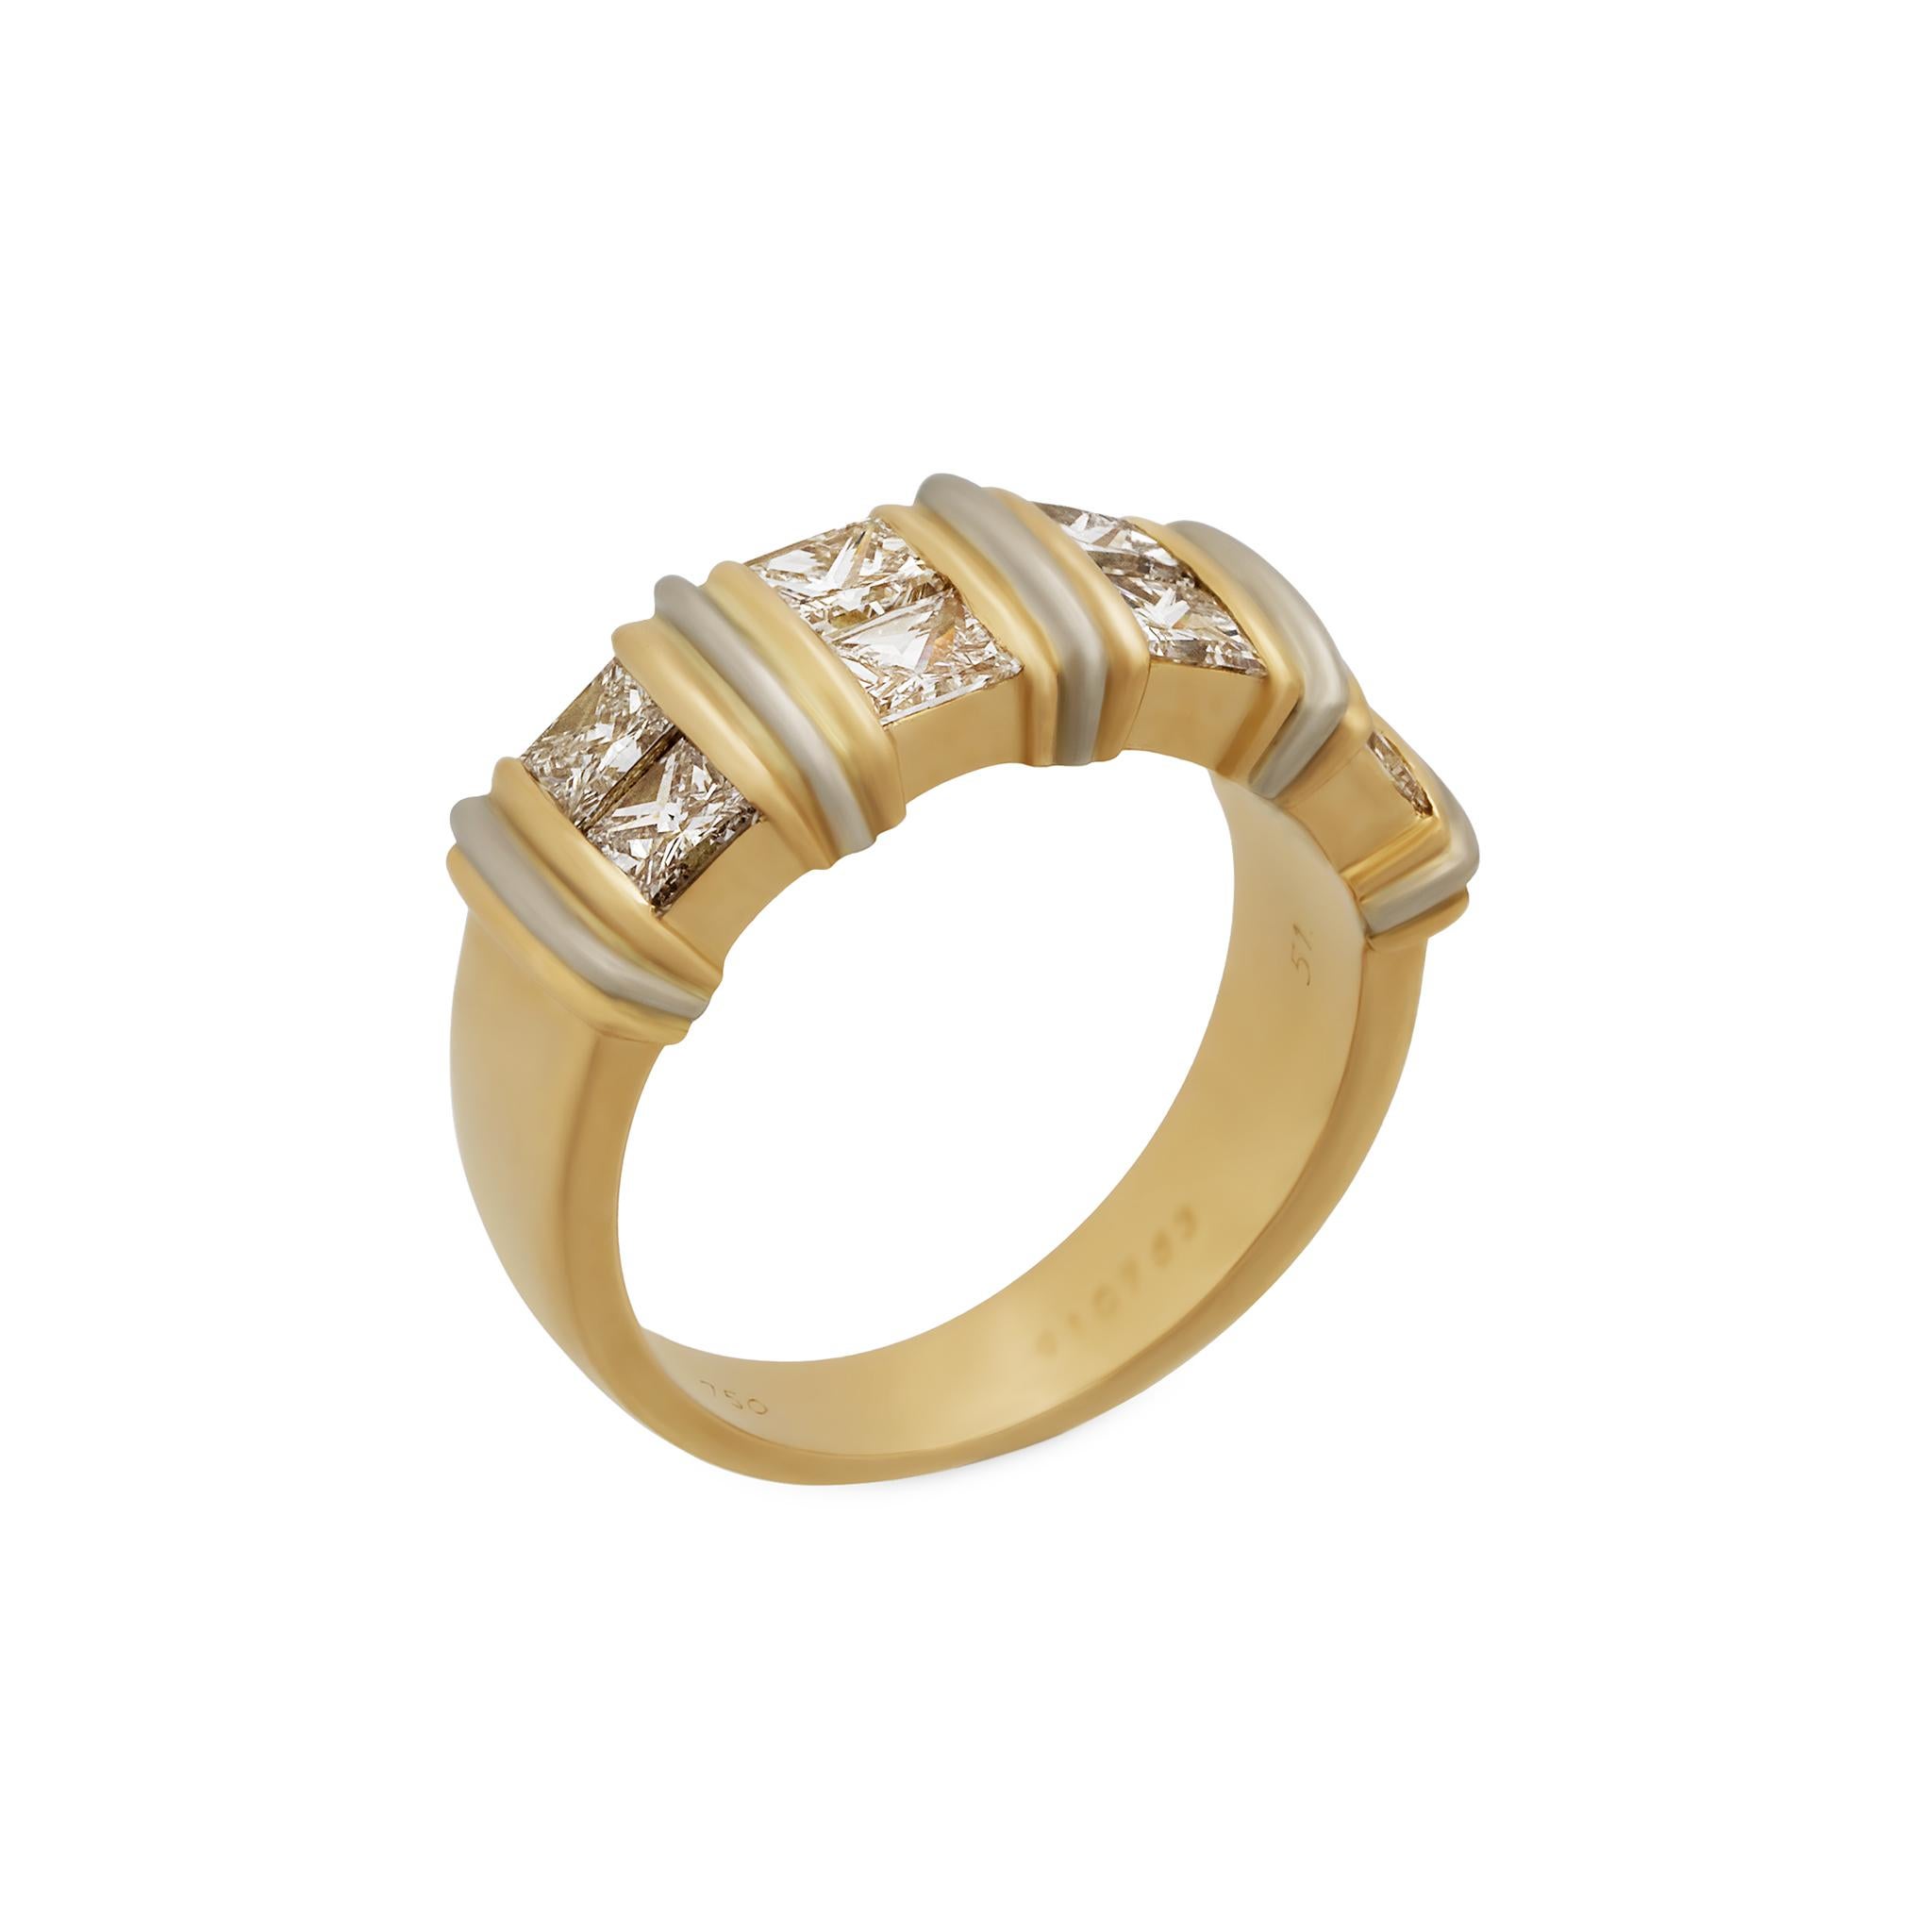 Women's Cartier 18 Karat Yellow and White Gold Princess Cut Diamond Ring